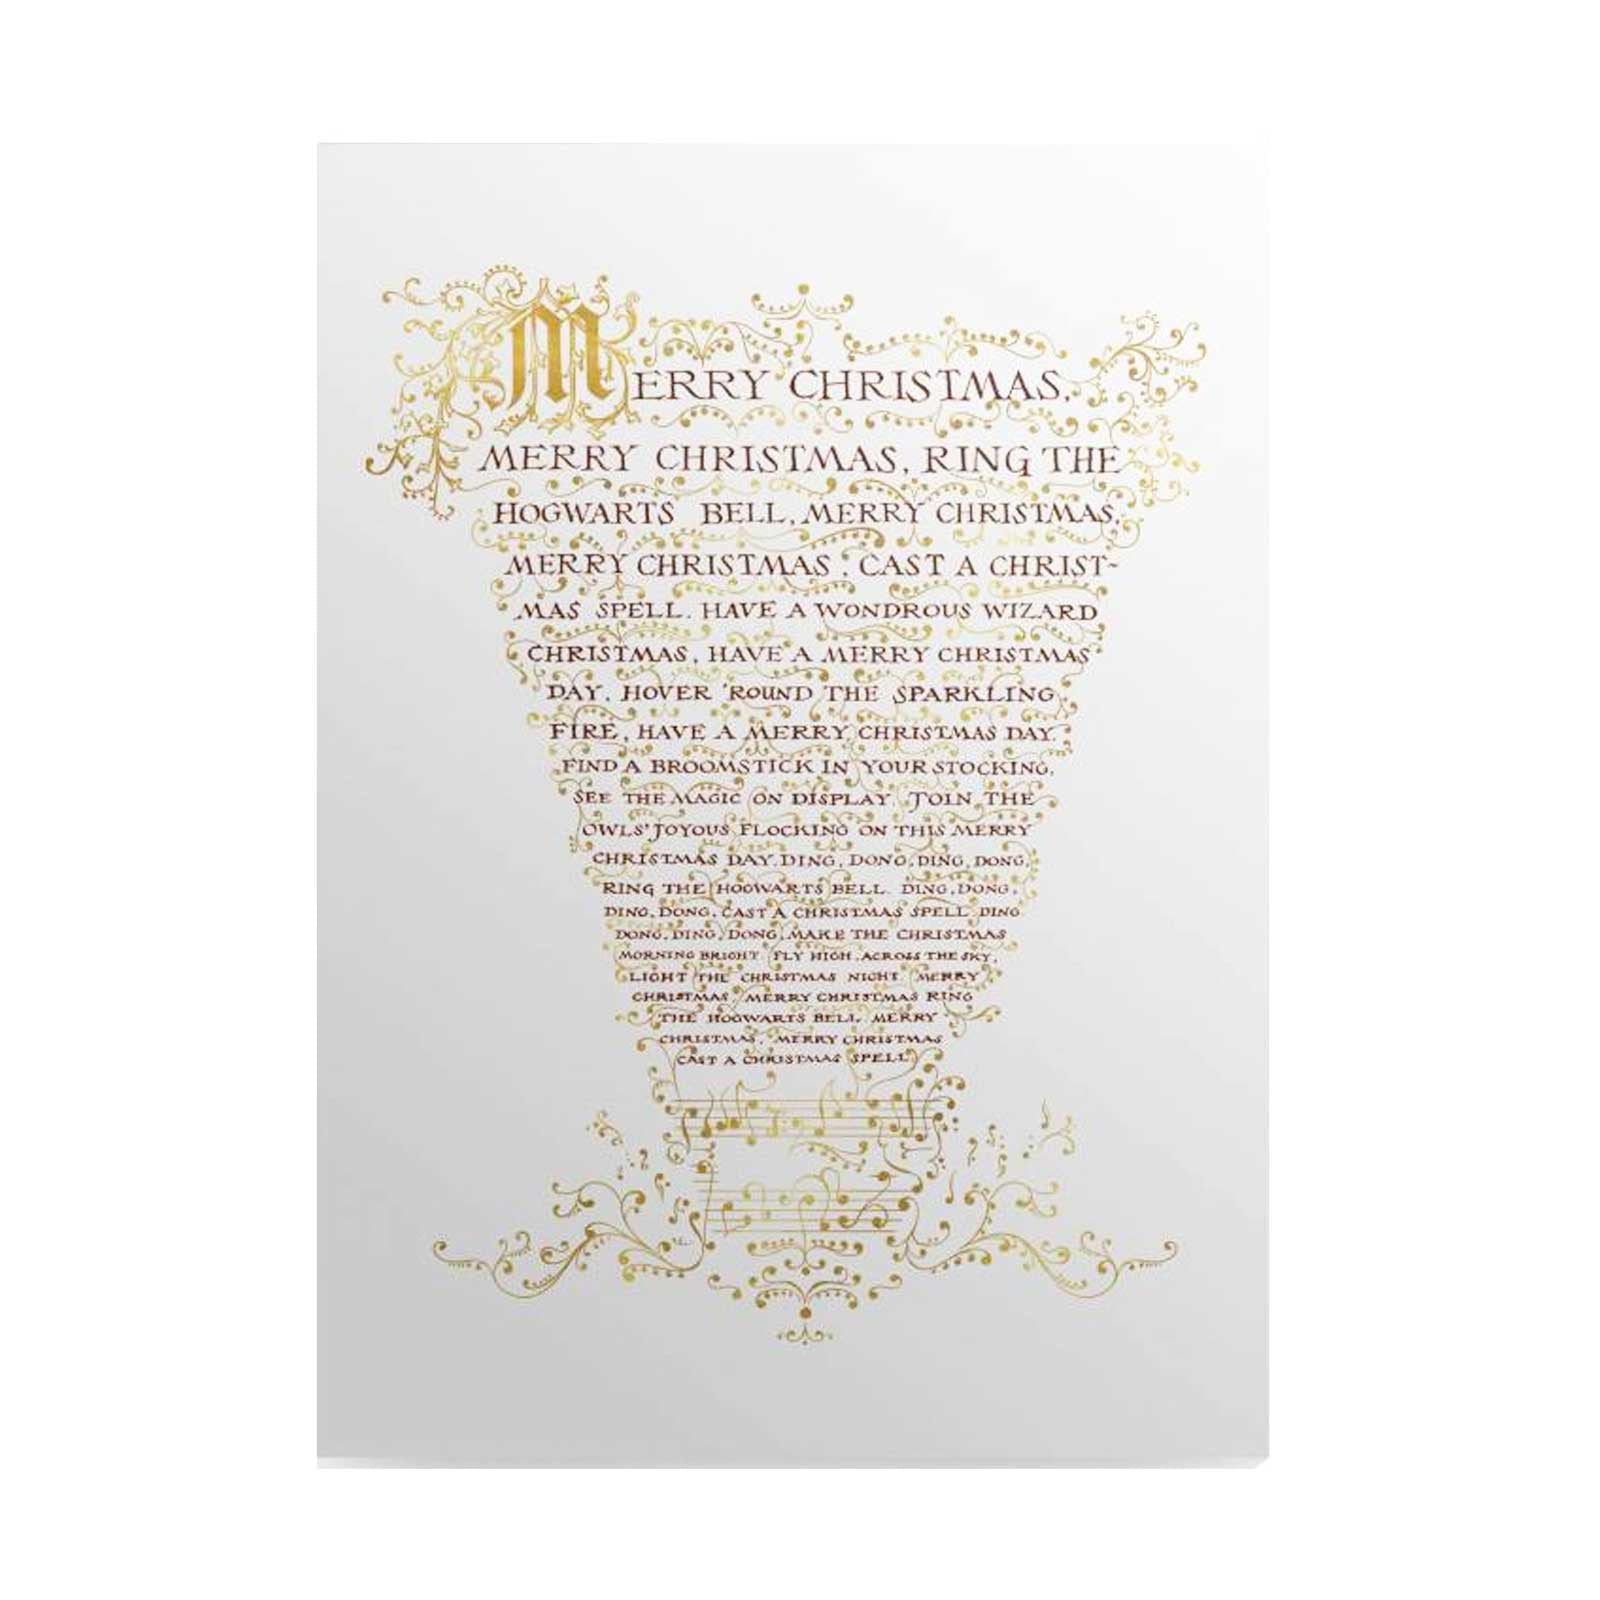 Hogwarts Christmas Carol Foiled Notecard